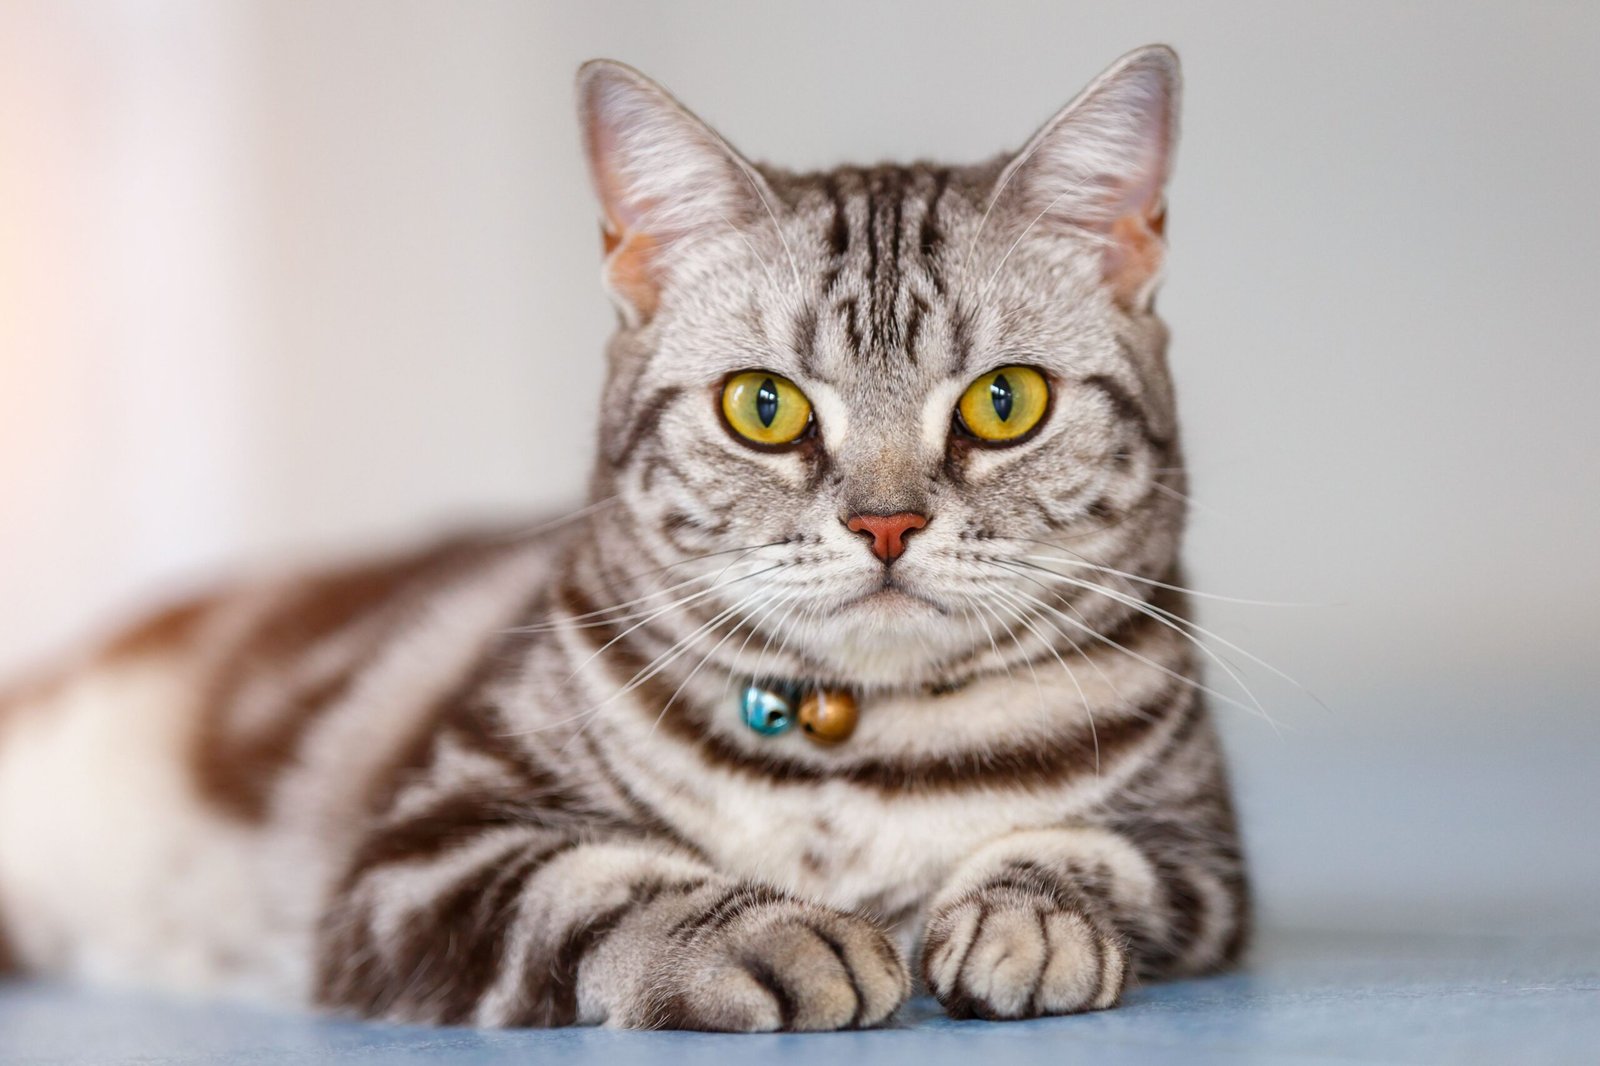 American Shorthair cat is ơne of The 12 Most Popular Cat Breeds